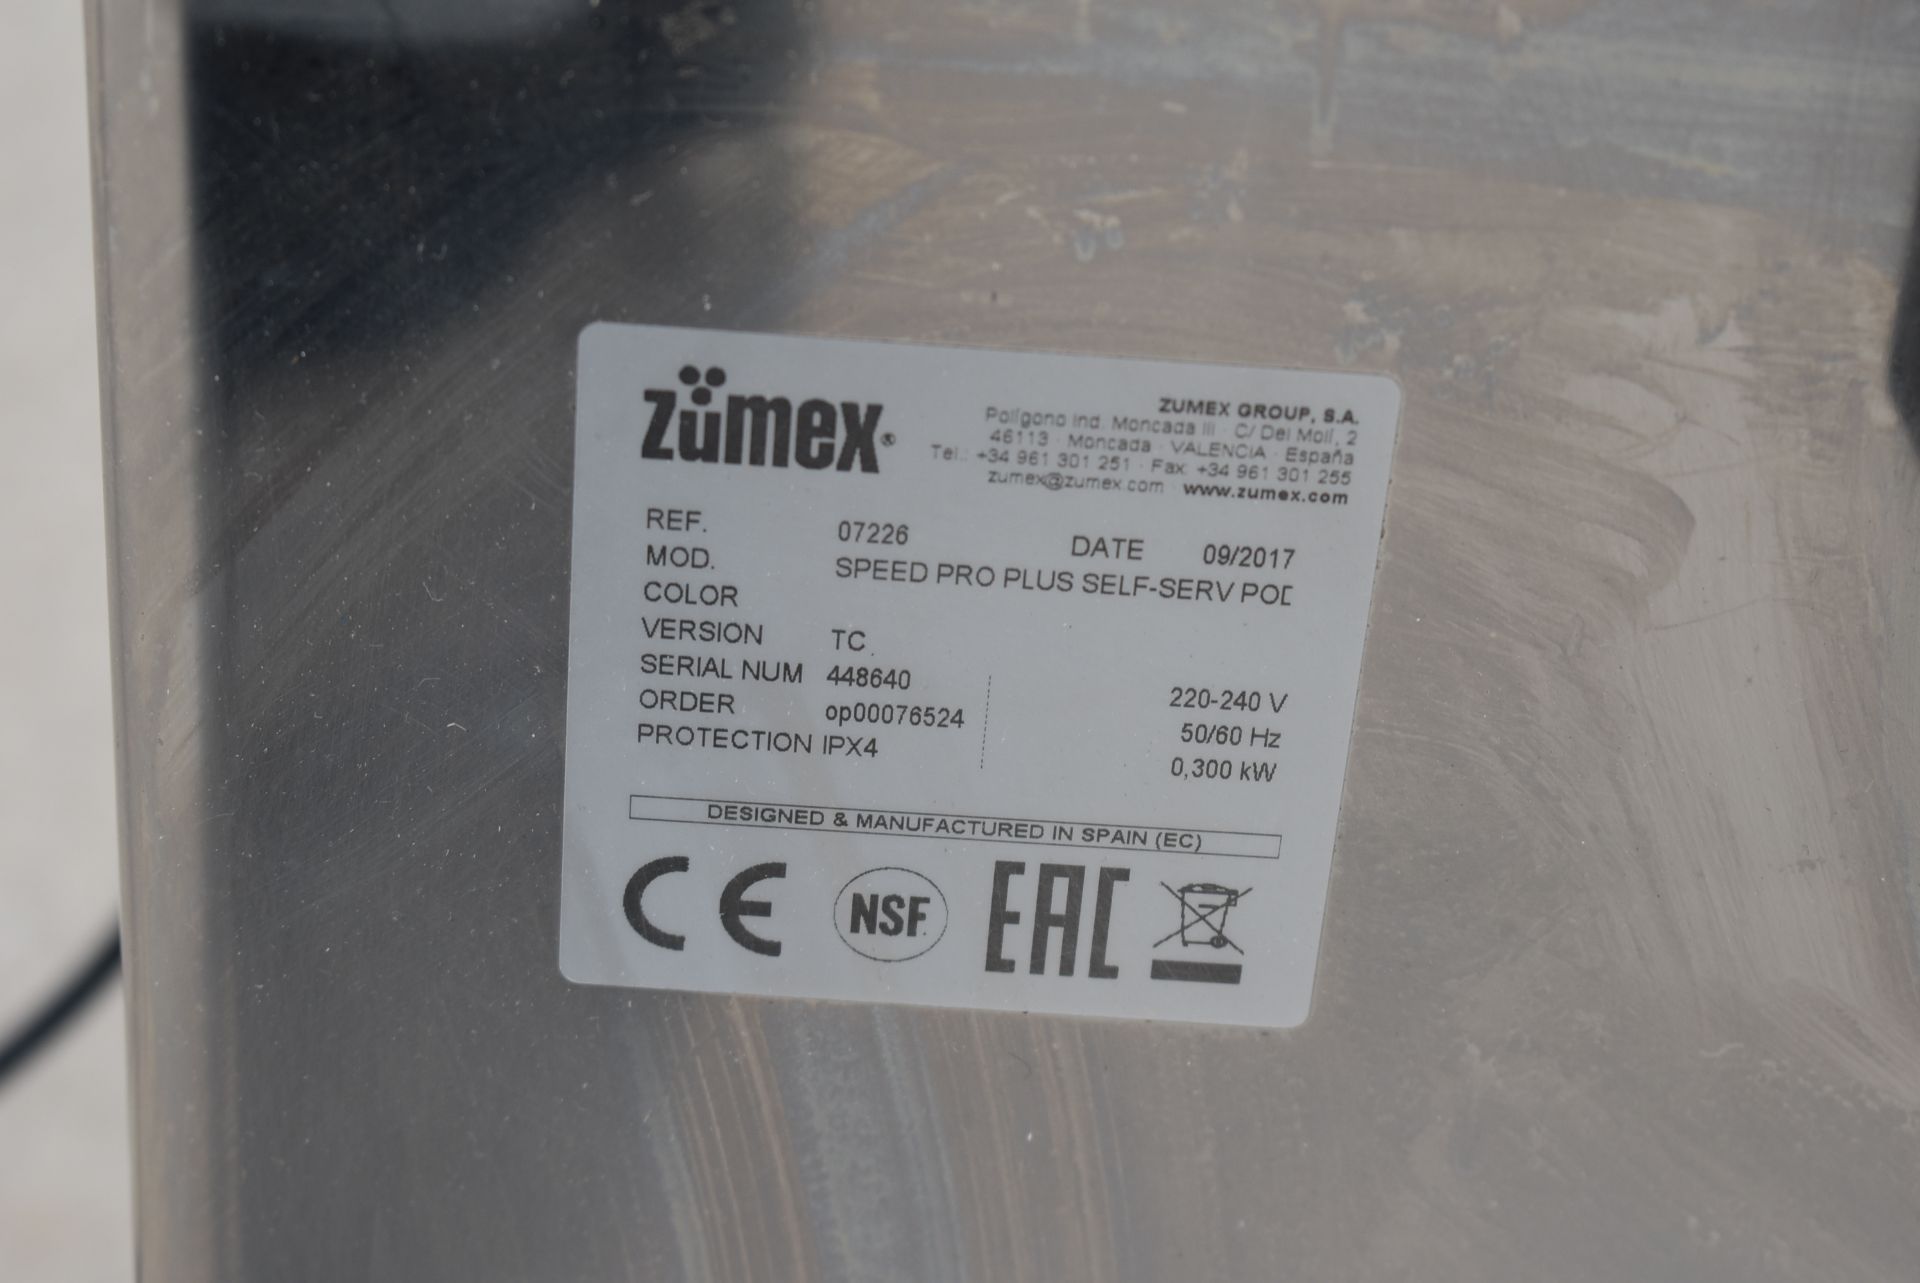 1 x Zumex Speed S +Plus Self-Service Podium Commercial Citrus Juicer - Manufactured in 2018 - - Image 2 of 6